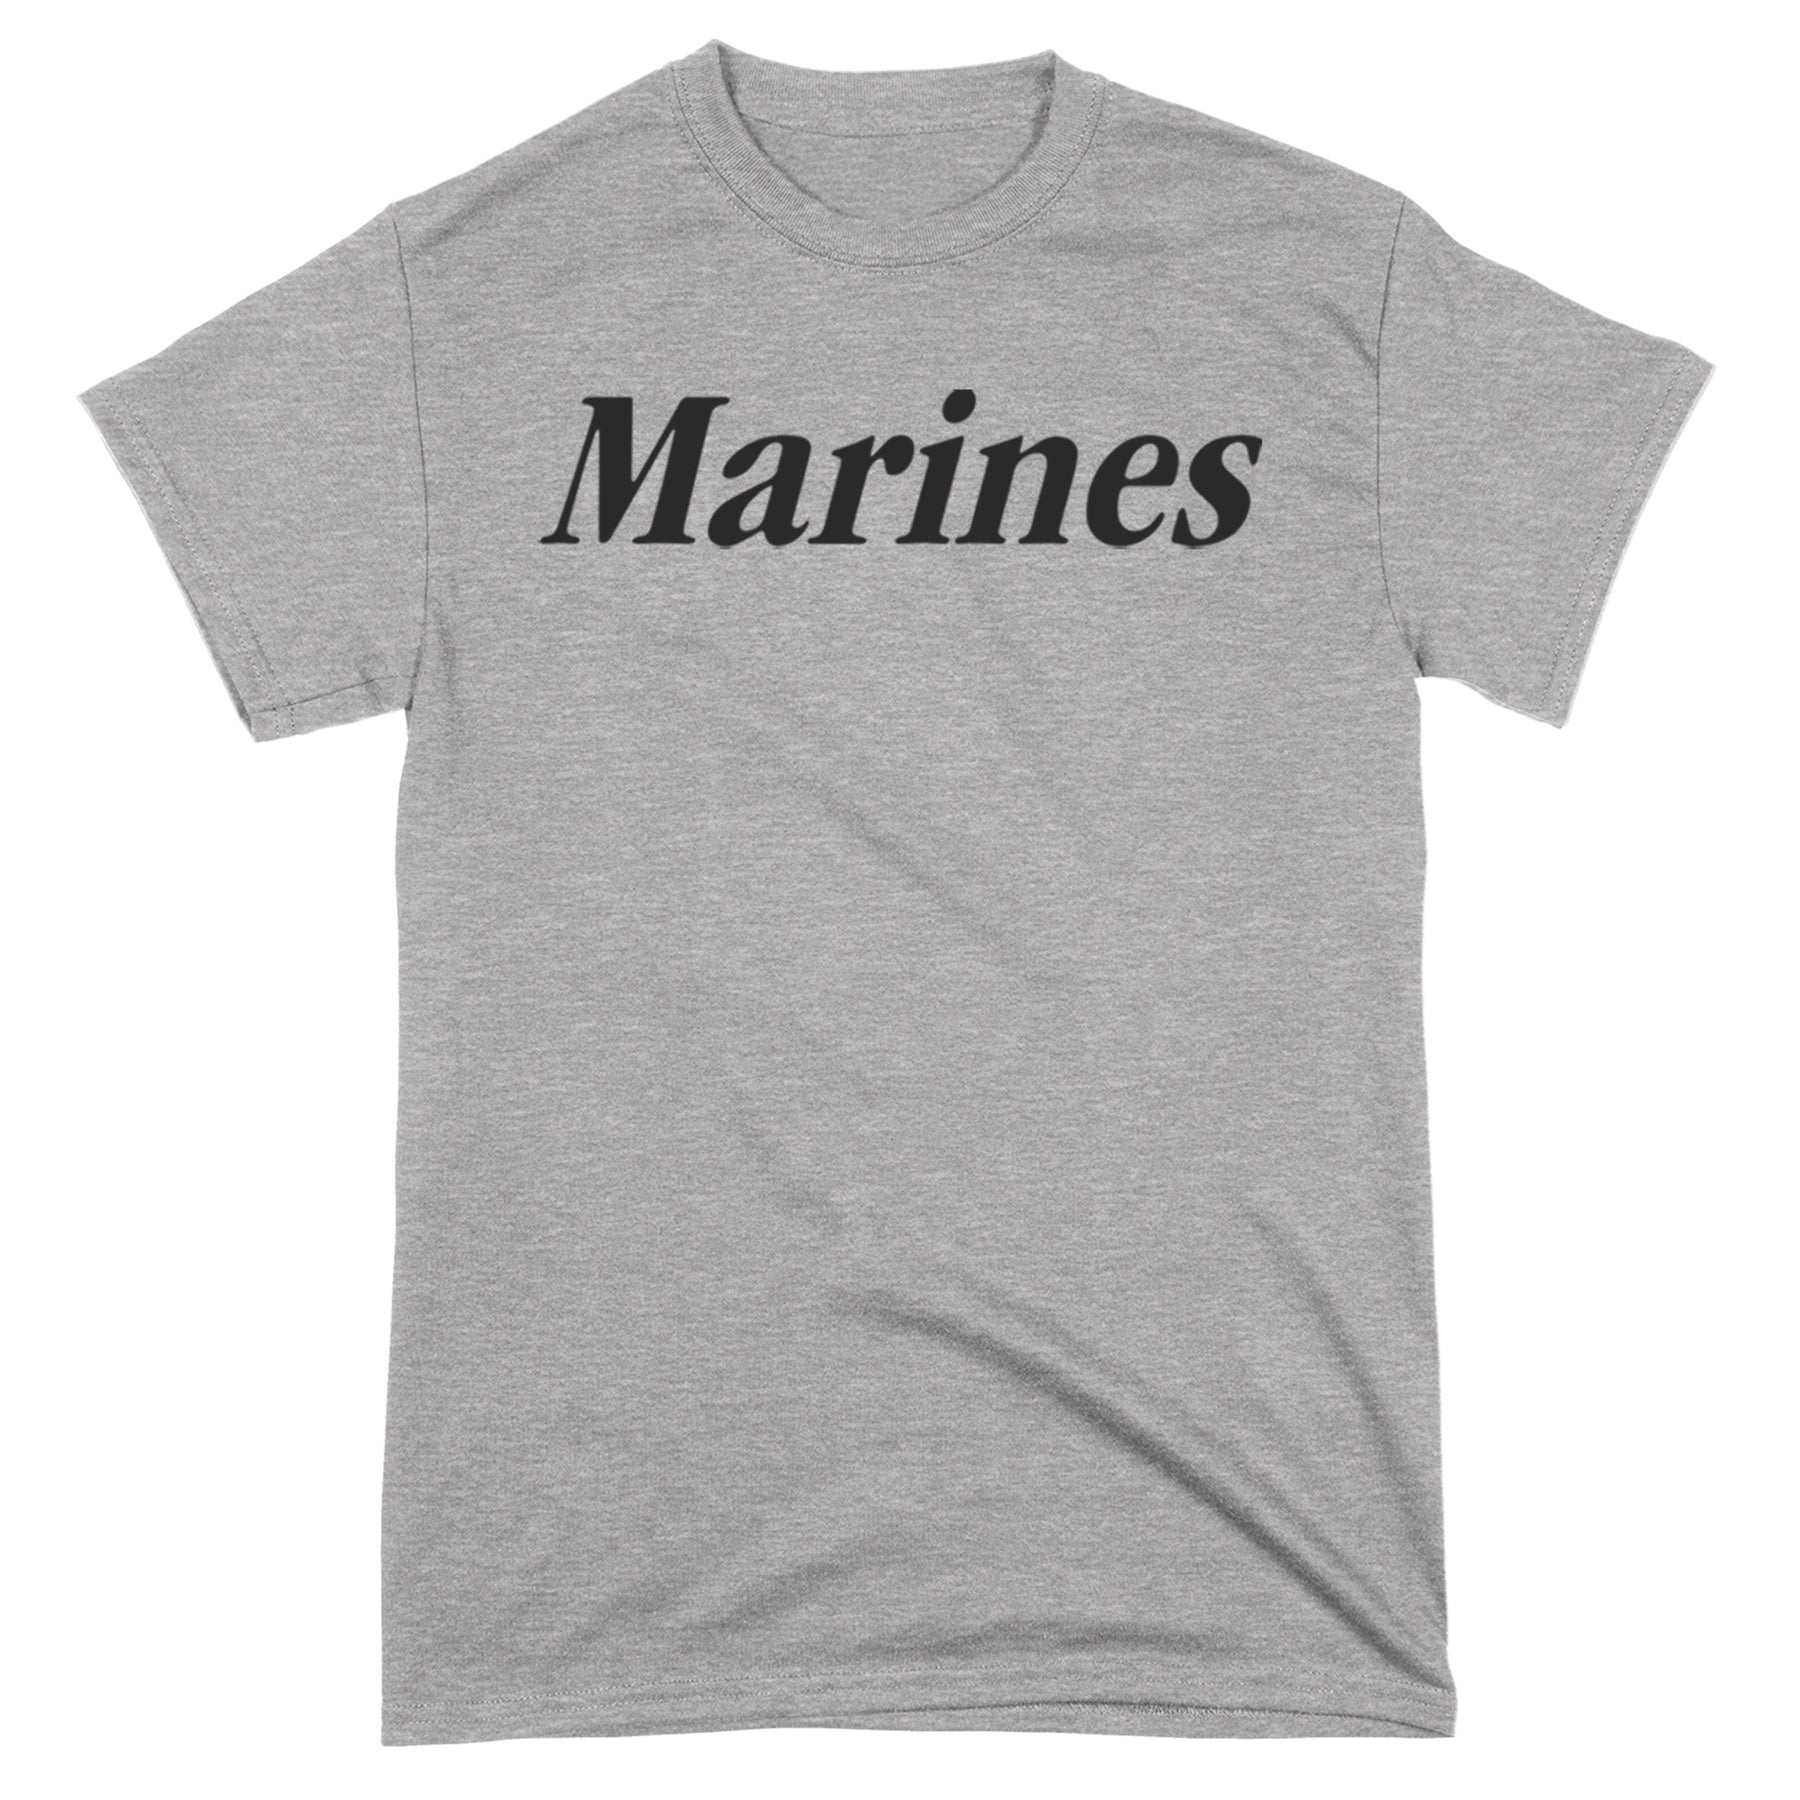 Classic Marines Tee